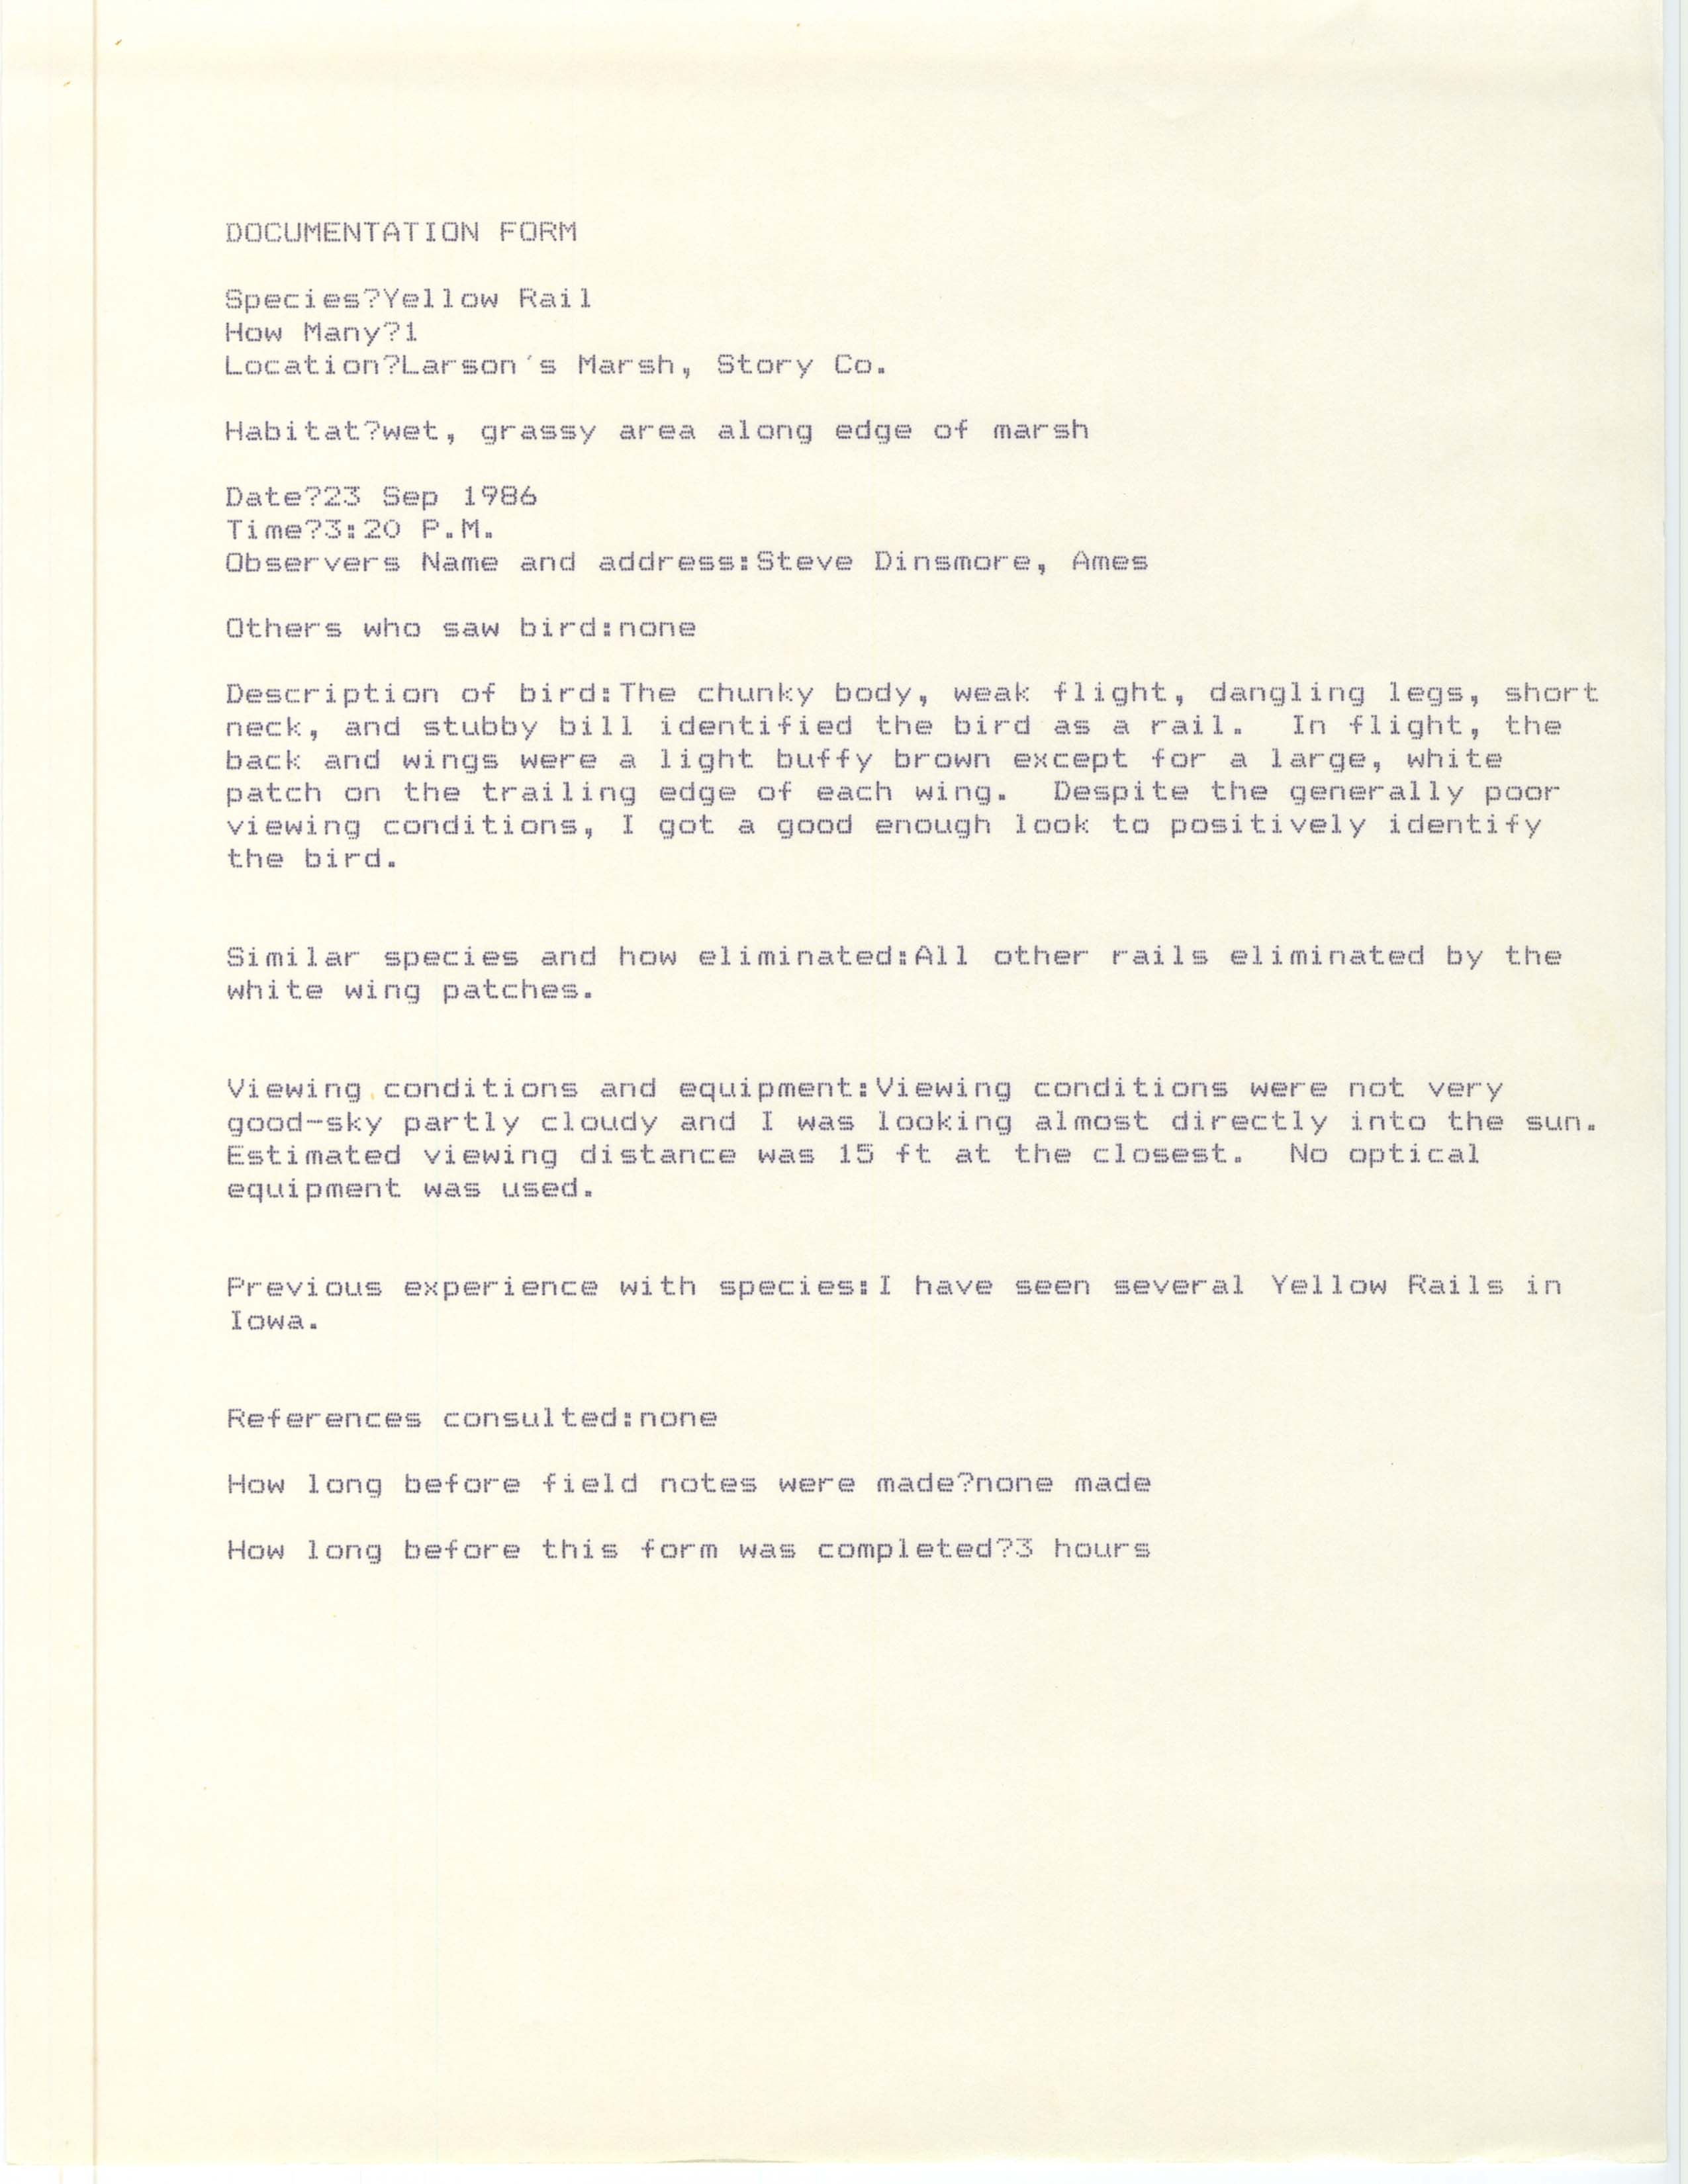 Rare bird documentation form for Yellow Rail at Larson's Marsh, 1986